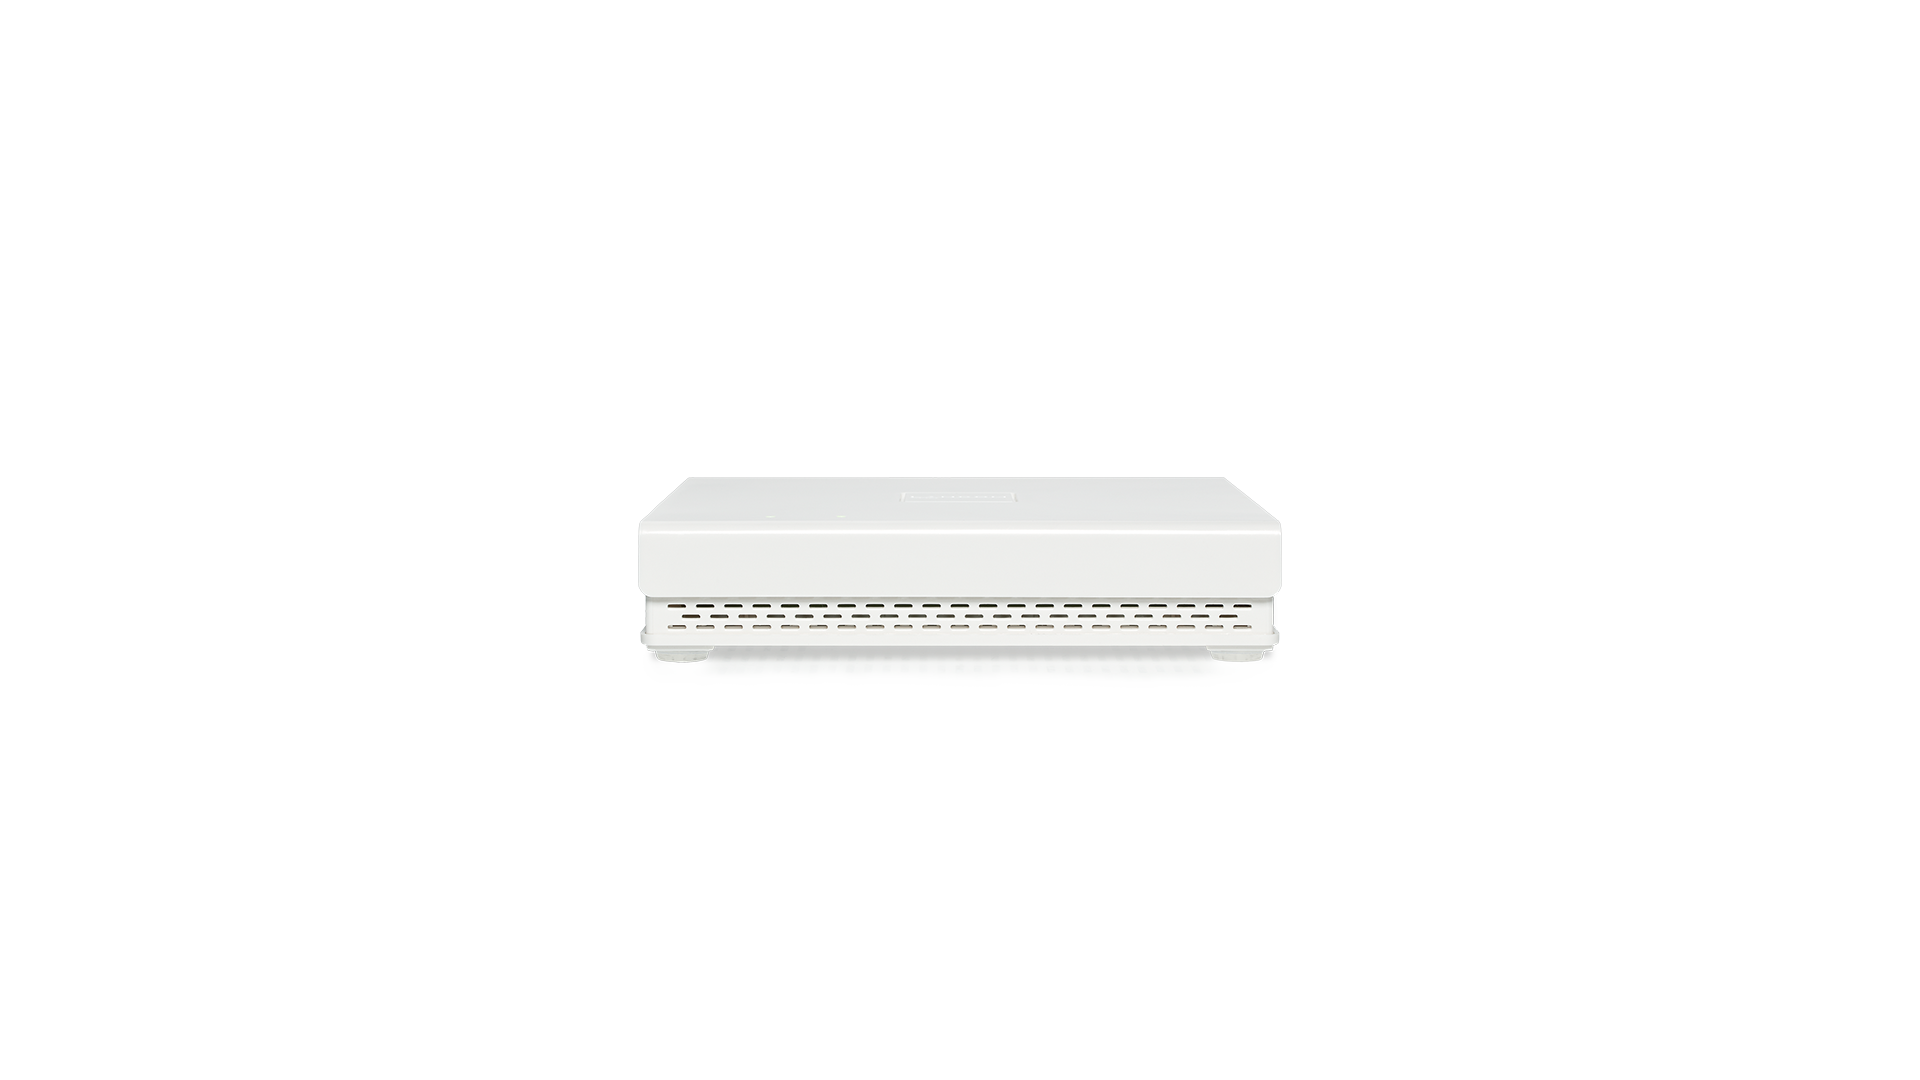 White square access point LANCOM LX-6500E front view